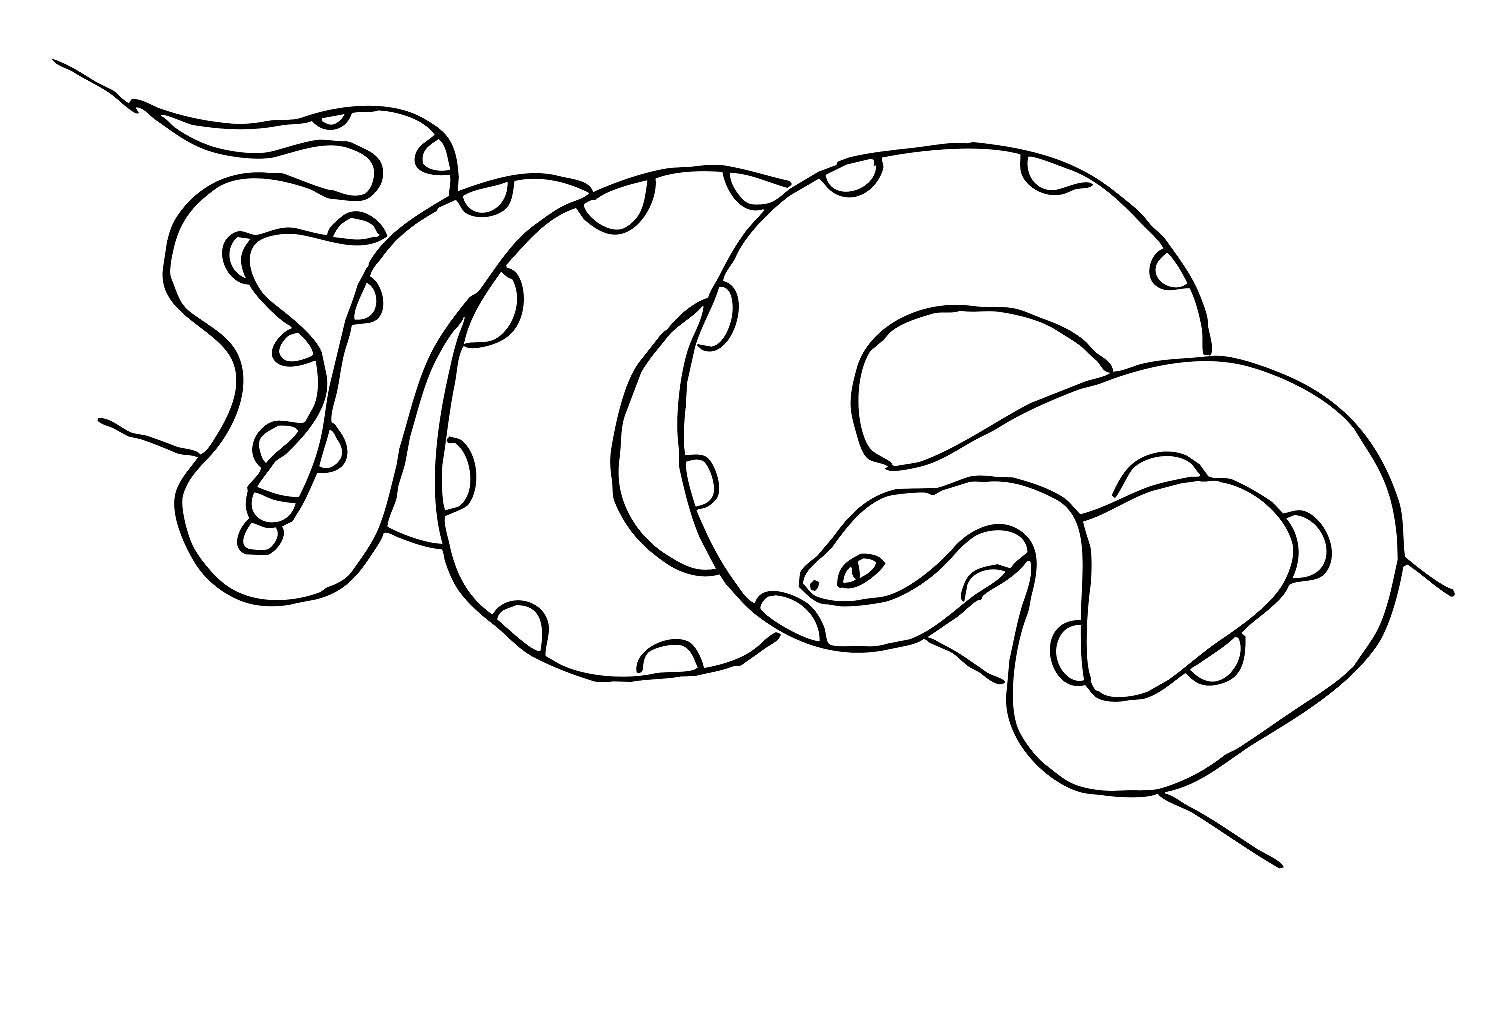 Удав рисунок. Змея питон раскраска. Змея раскраска. Удав раскраска для детей. Раскраска змеи для детей.